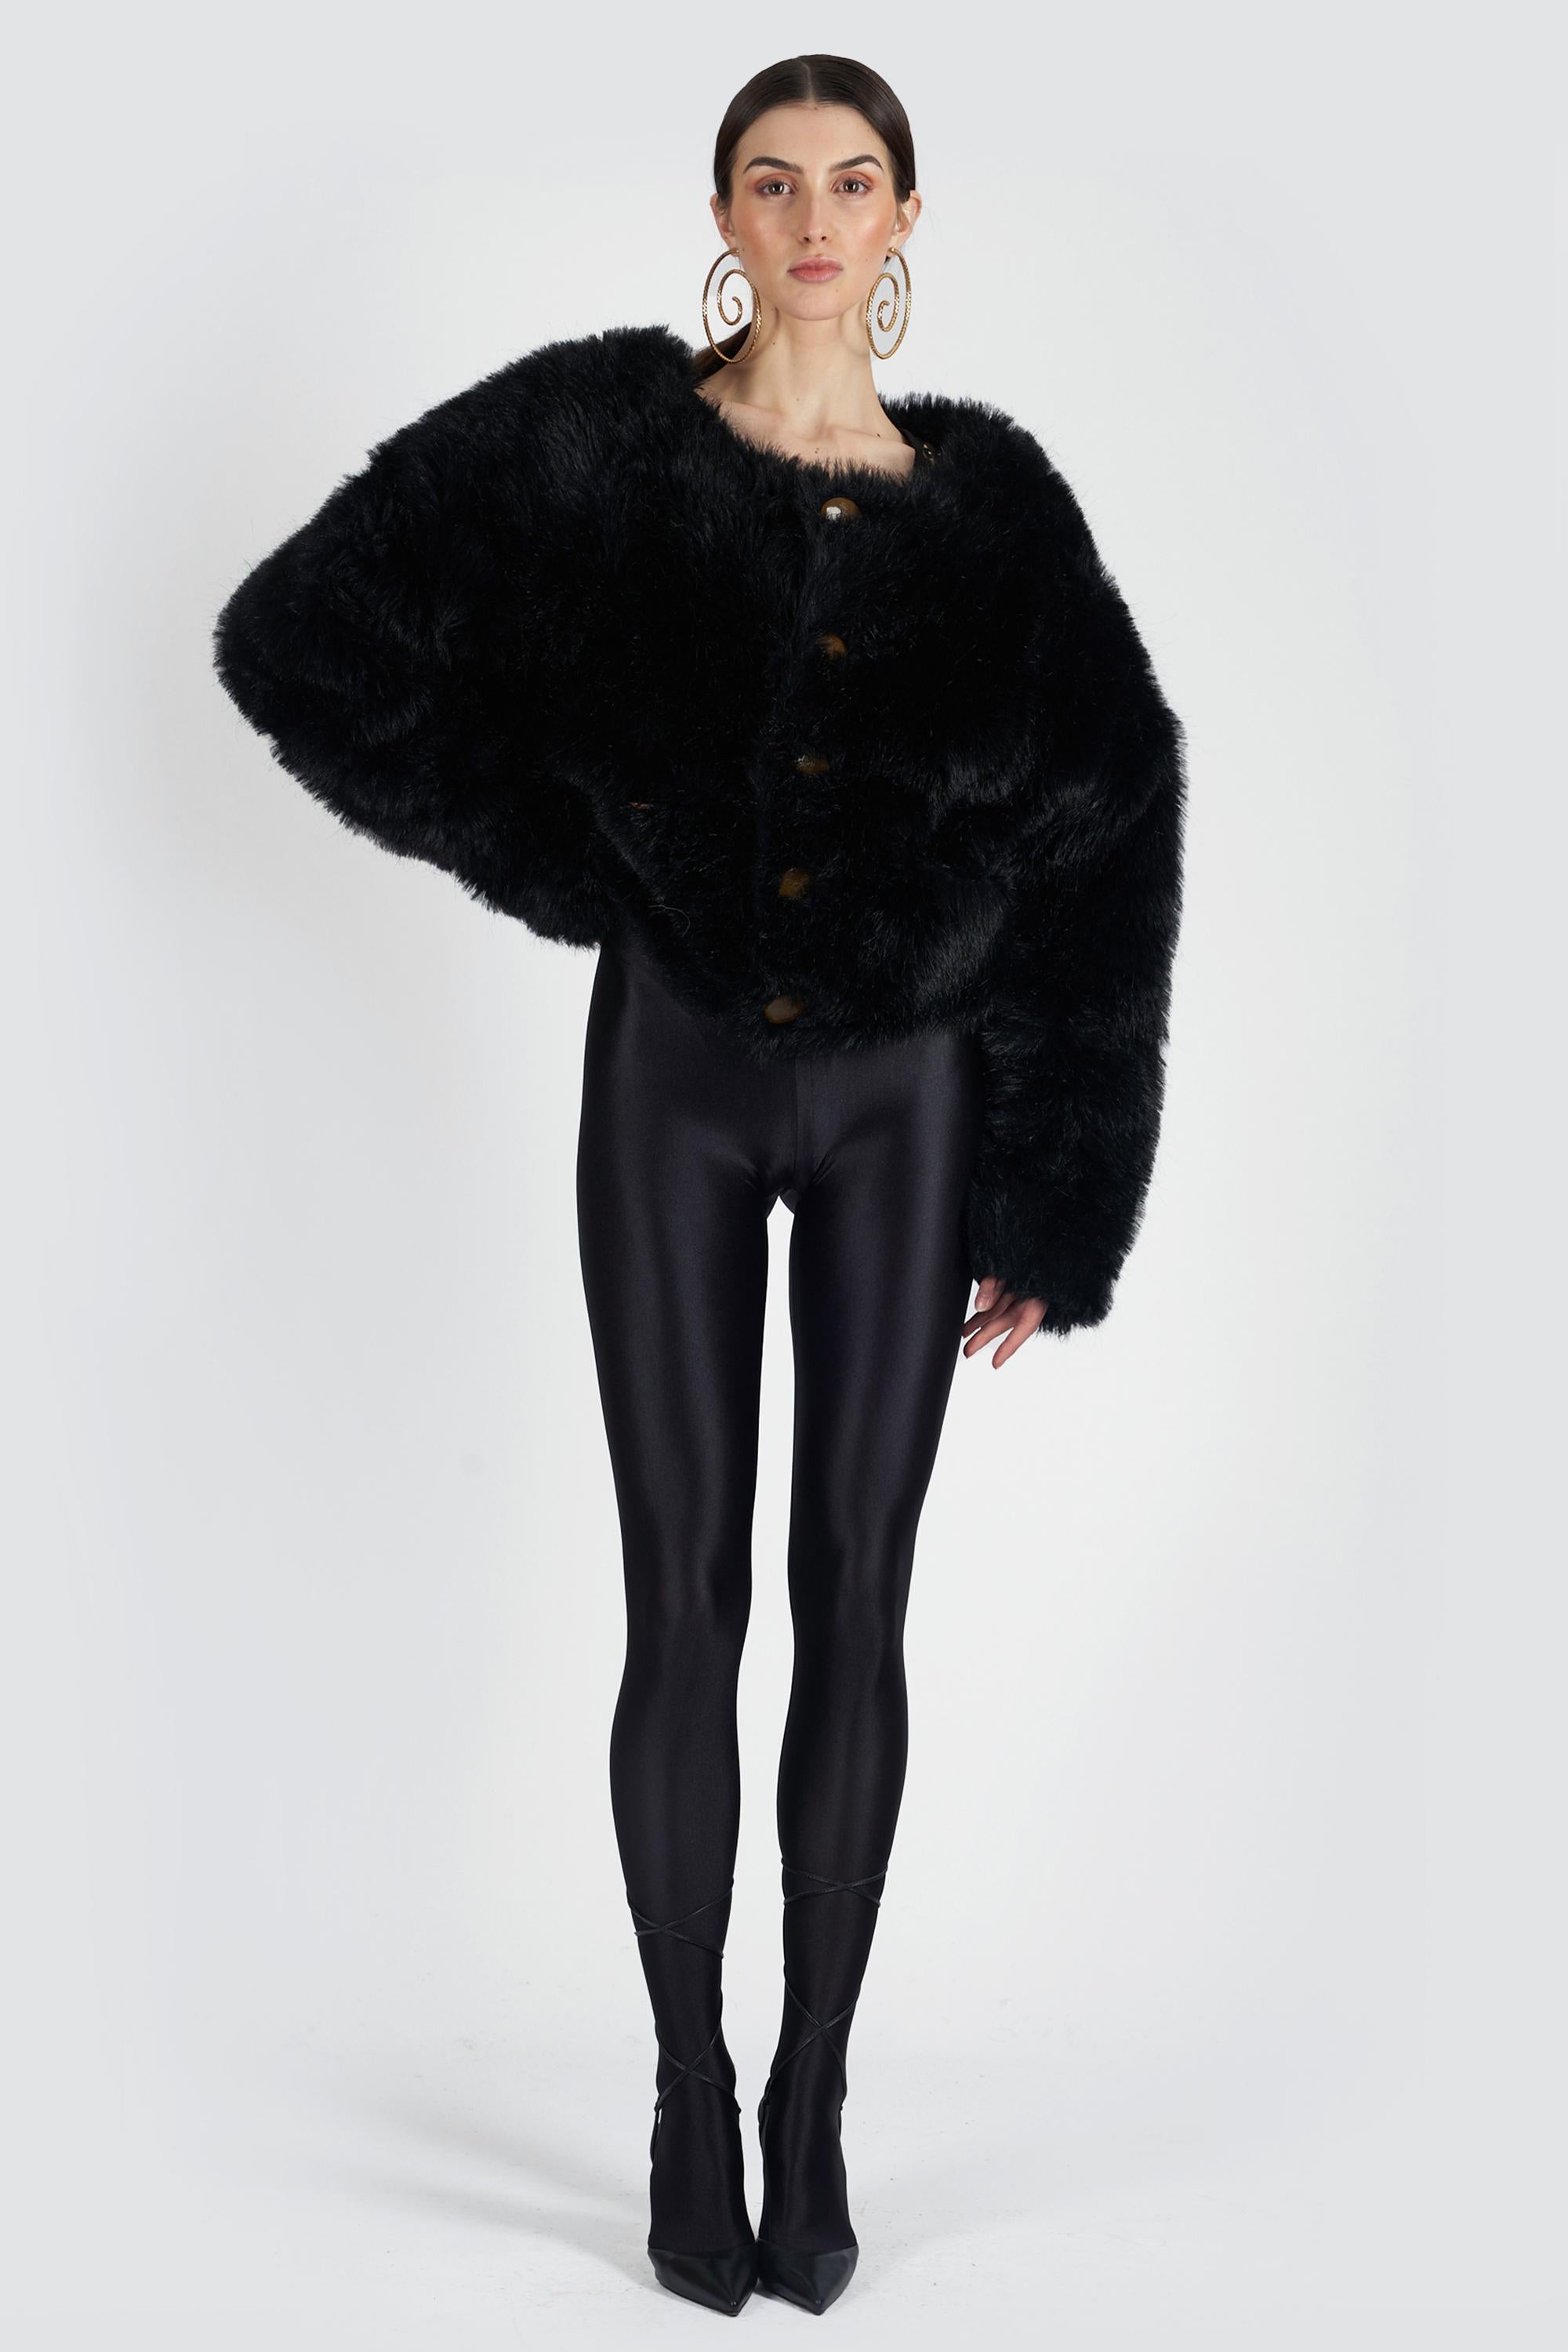 Vivienne Westwood Vintage F/W 1992 Faux Fur Gorilla Jacket In Excellent Condition For Sale In London, GB